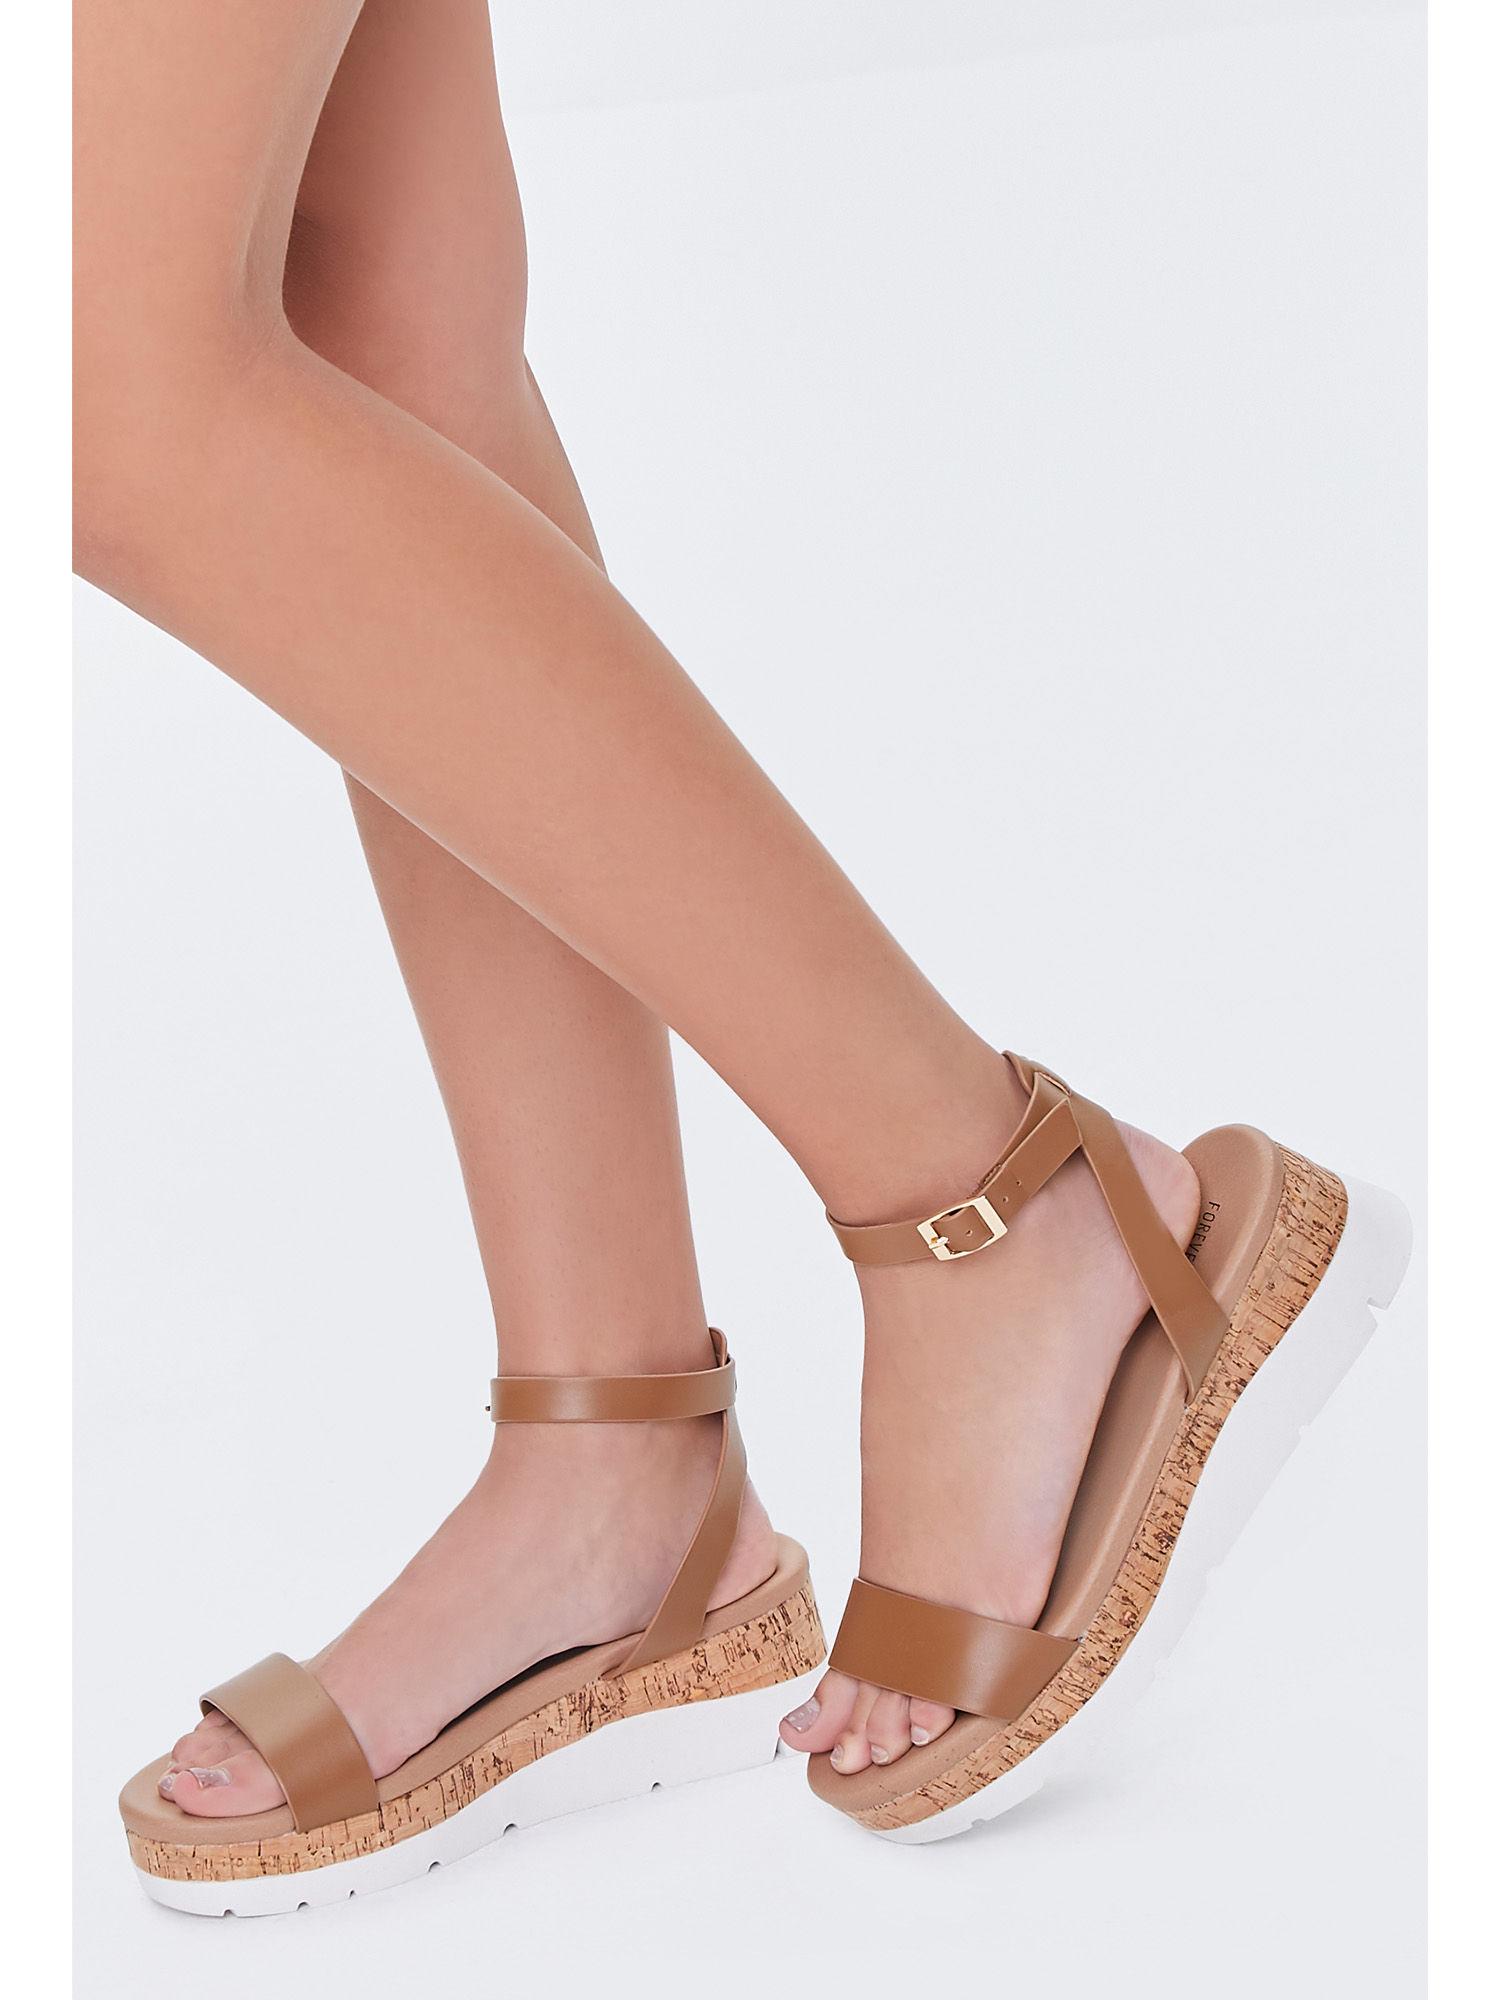 brown sandal